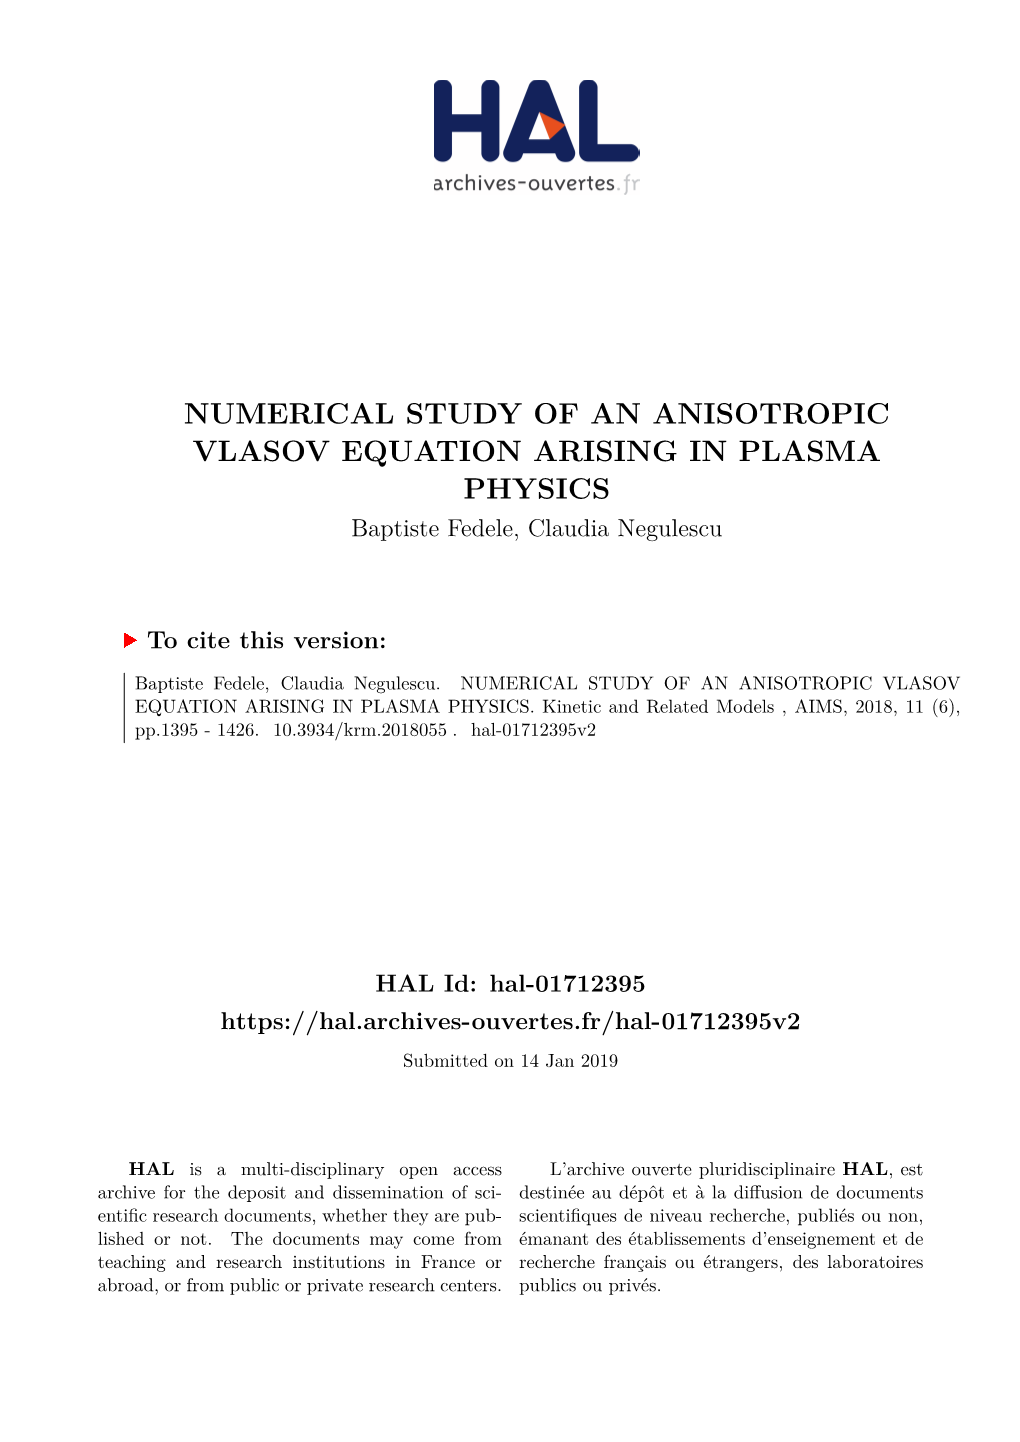 NUMERICAL STUDY of an ANISOTROPIC VLASOV EQUATION ARISING in PLASMA PHYSICS Baptiste Fedele, Claudia Negulescu